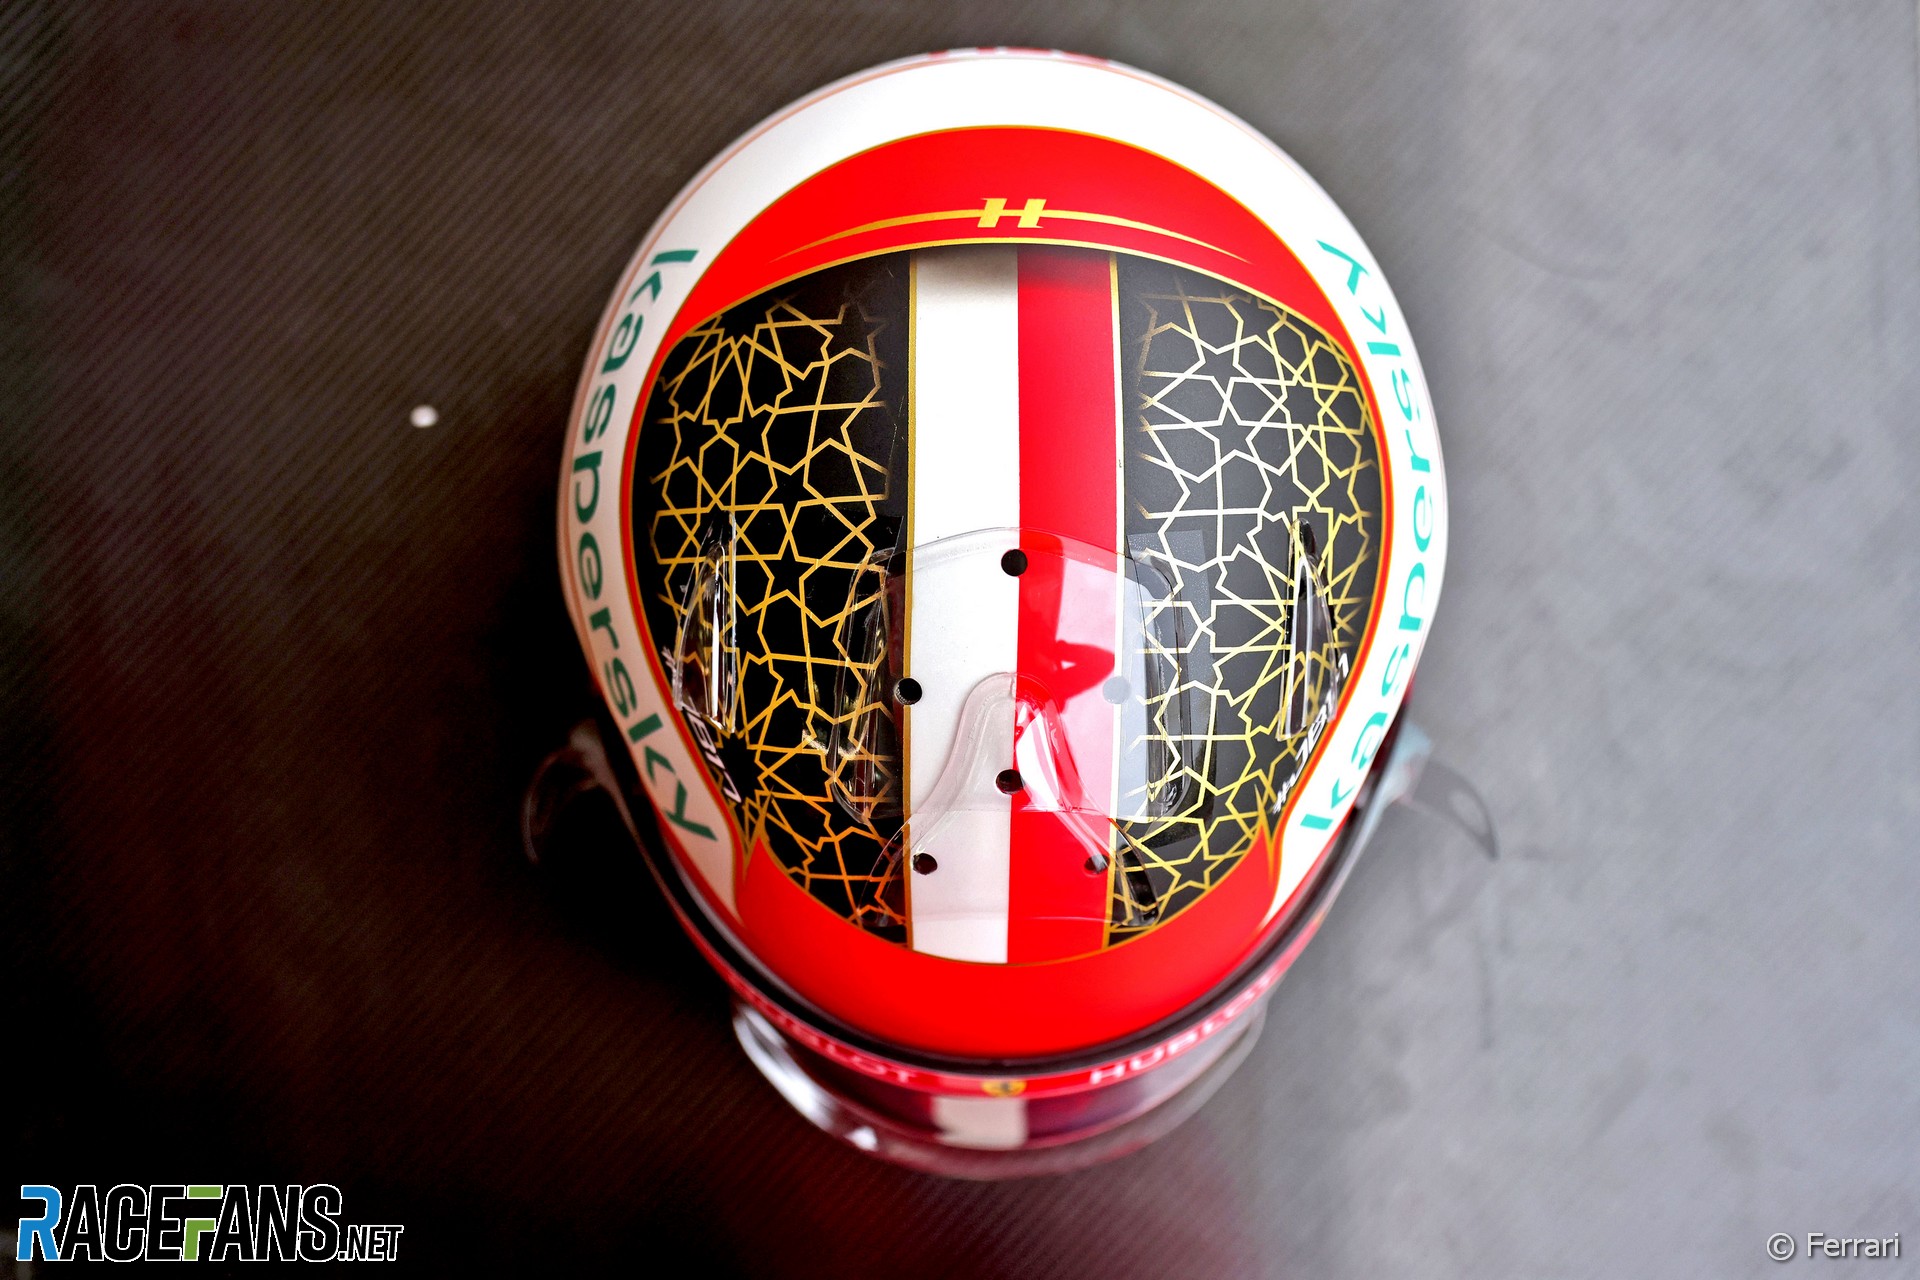 Charles Leclerc's 2020 Bahrain Grand Prix helmet design